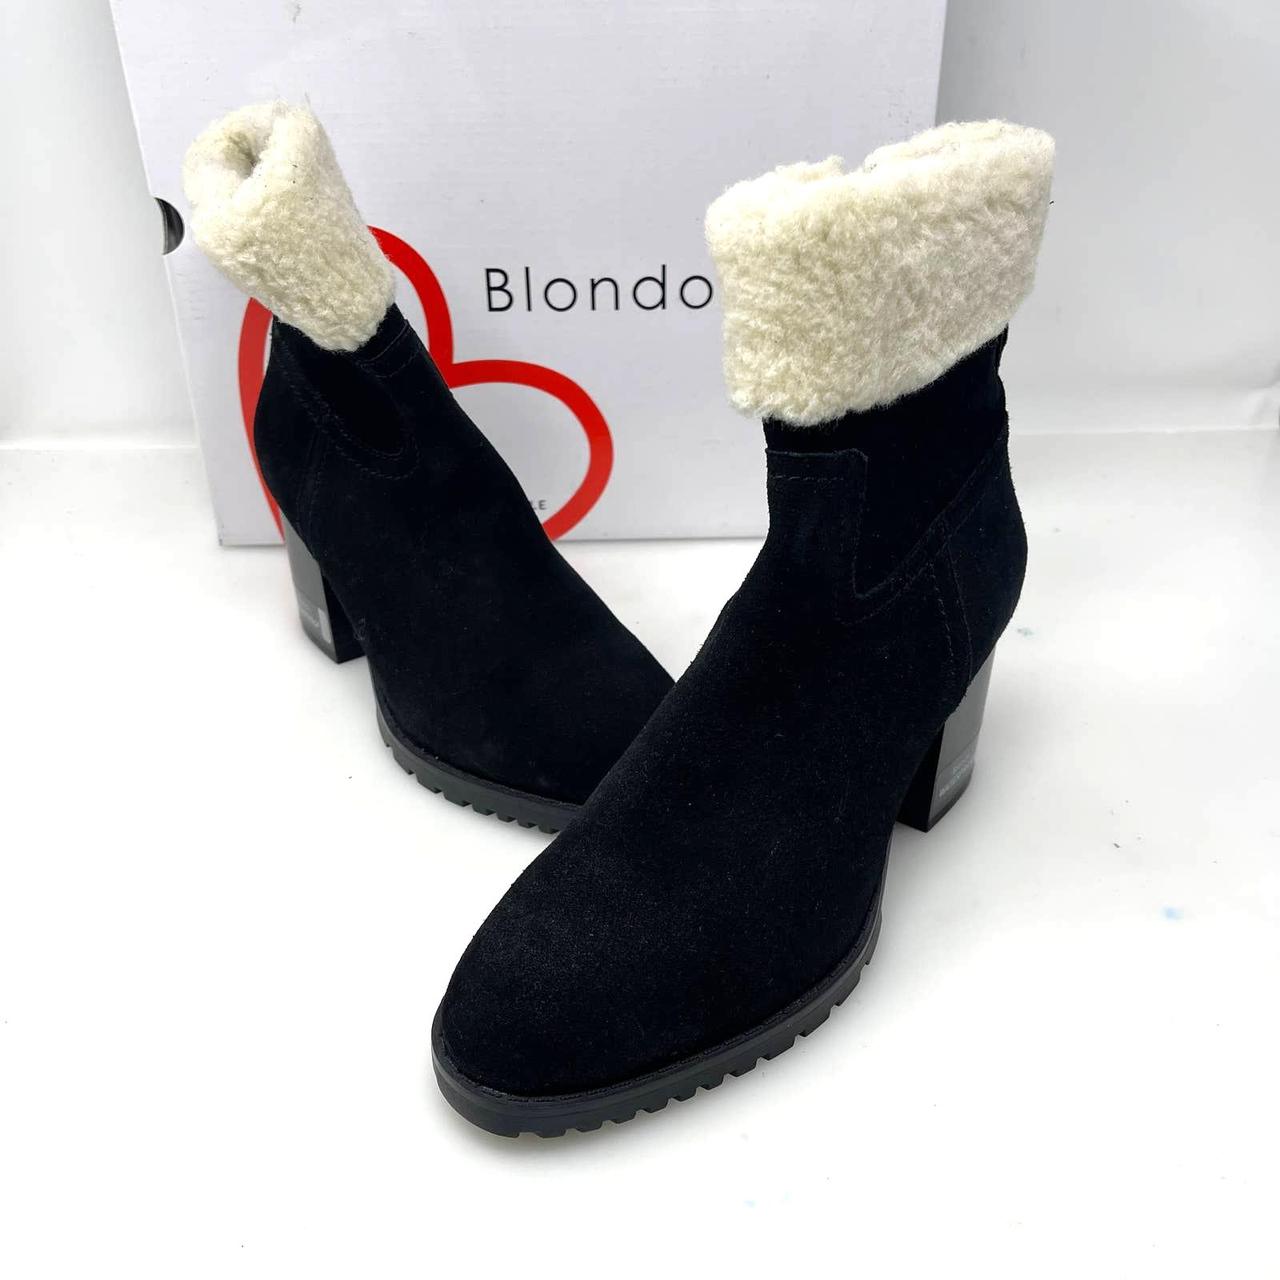 Blondo Tia Sherpa Cuff Ankle Booties in Black Size... - Depop